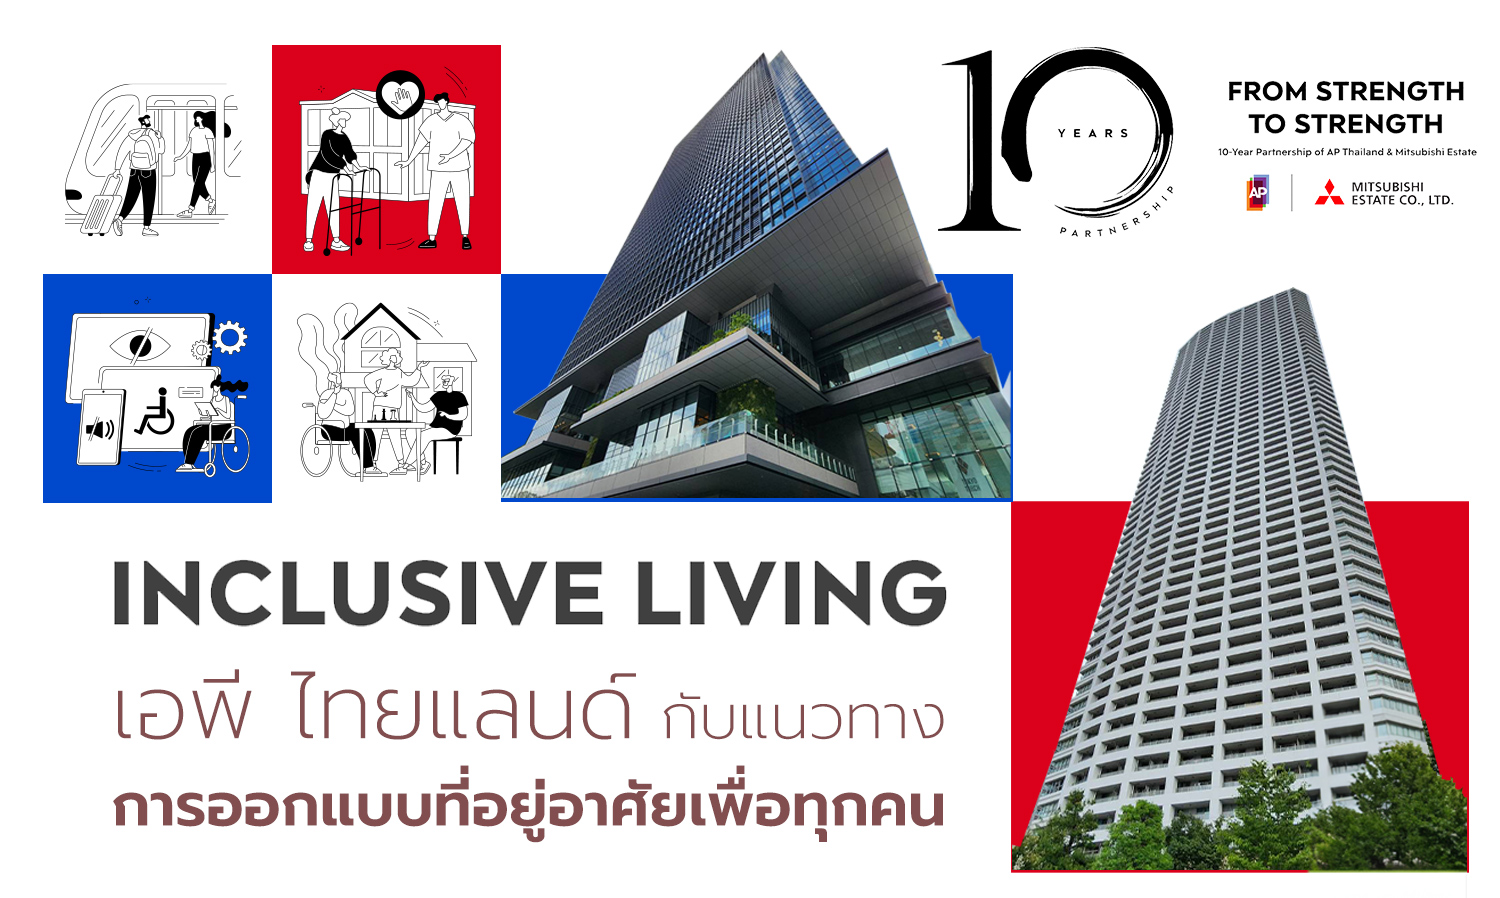 AP Thailand x Mitsubishi Estate ครบรอบ 10 ปี  พาดูงานภายใต้การออกแบบ Inclusive Living ณ กรุงโตเกียว ประเทศญี่ปุ่น